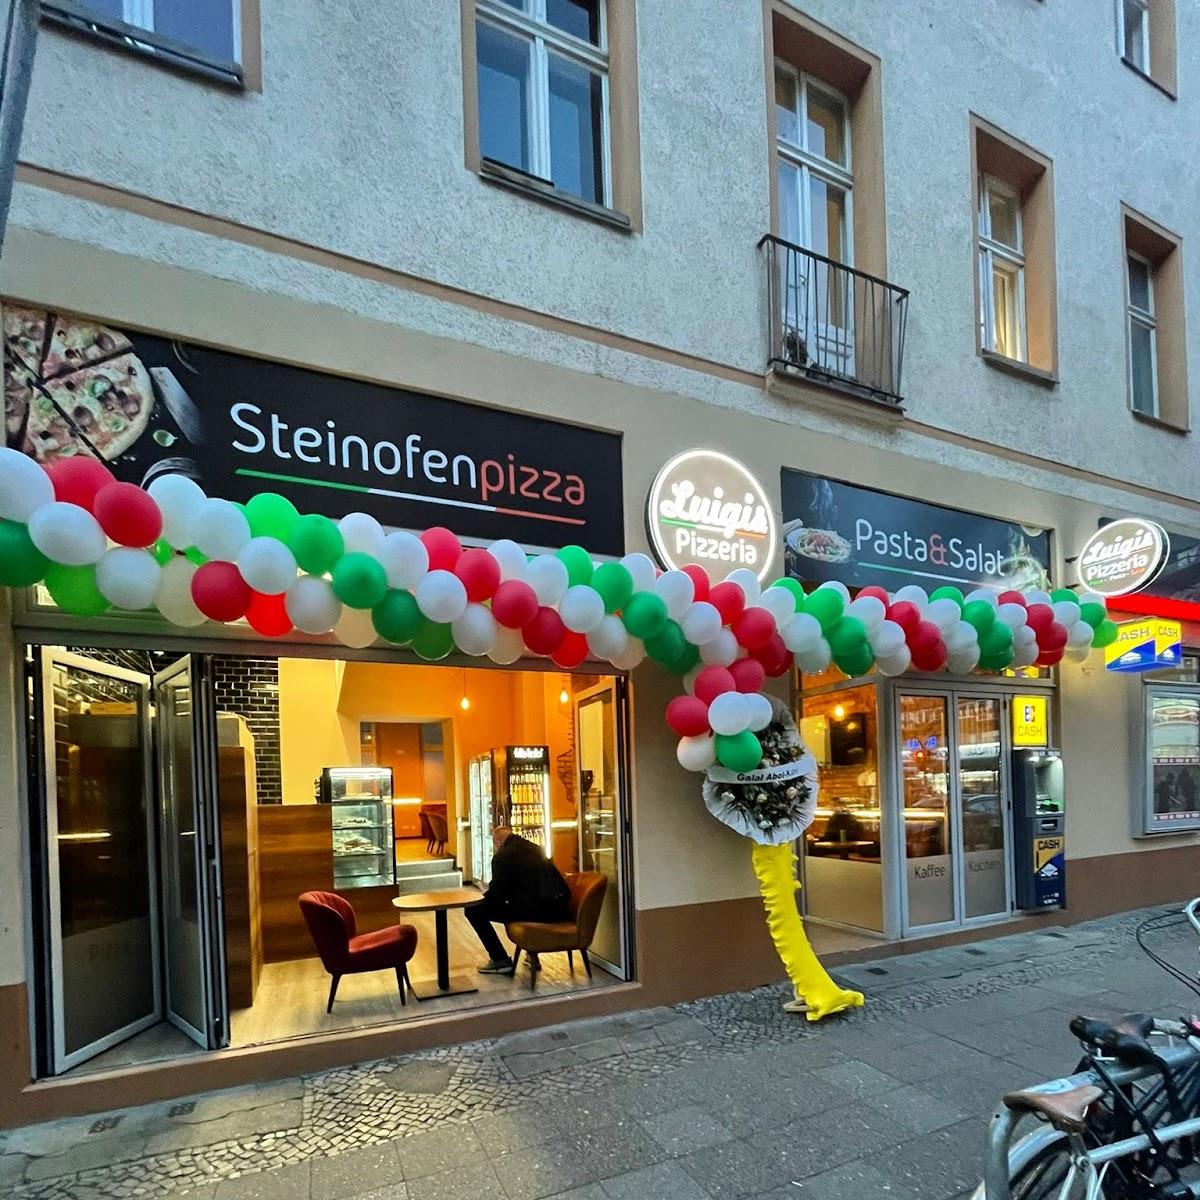 Restaurant "Luigis Pizzeria" in Berlin